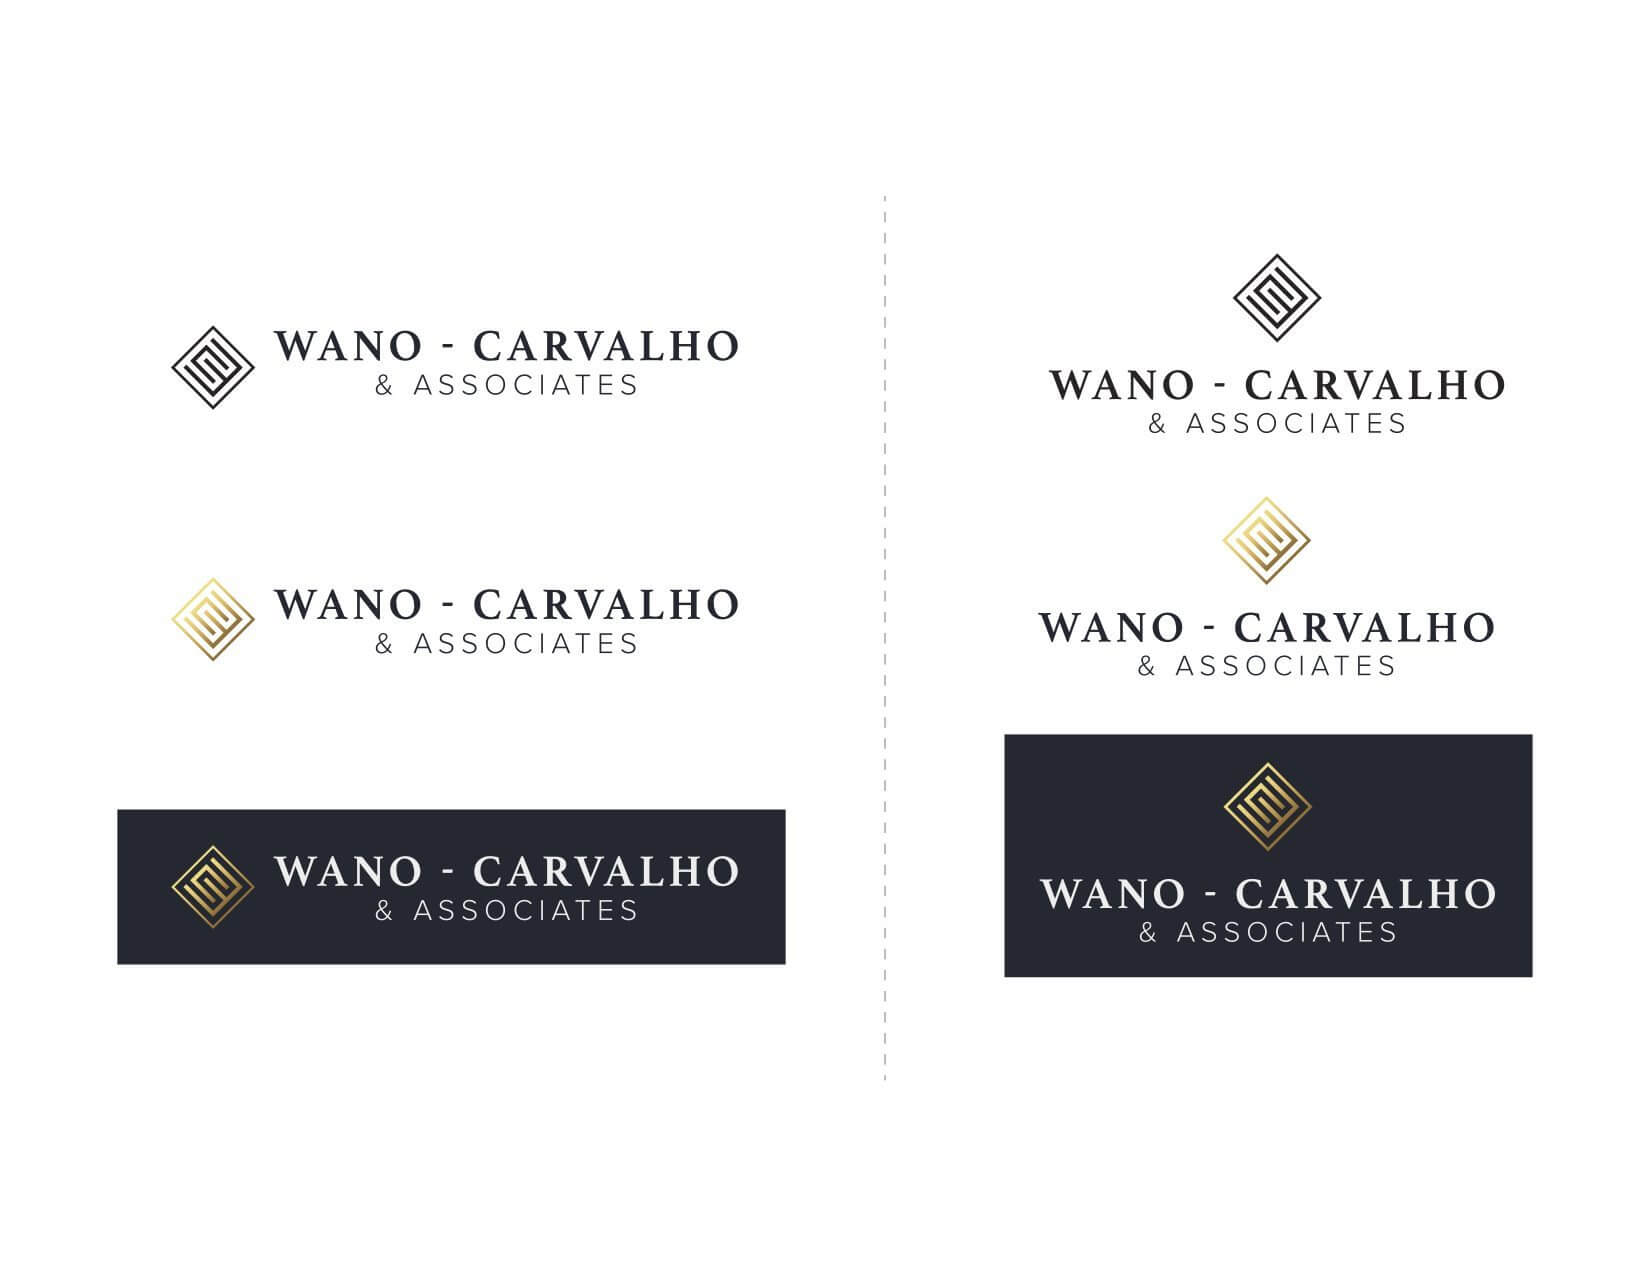 Chepri created branding for Wano, Carvalho & Associates new website